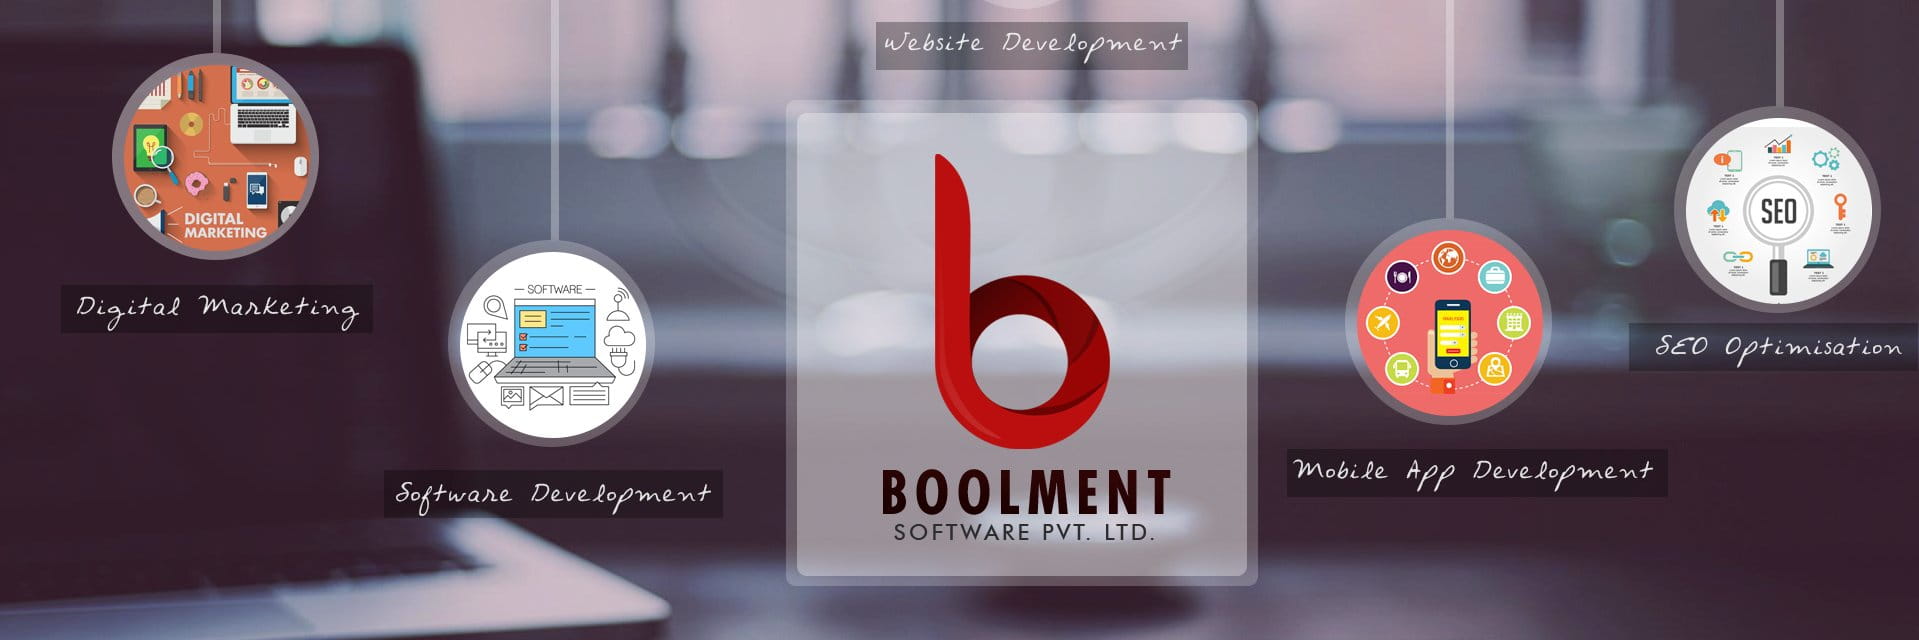 Boolment Software Development Pvt Ltd cover picture